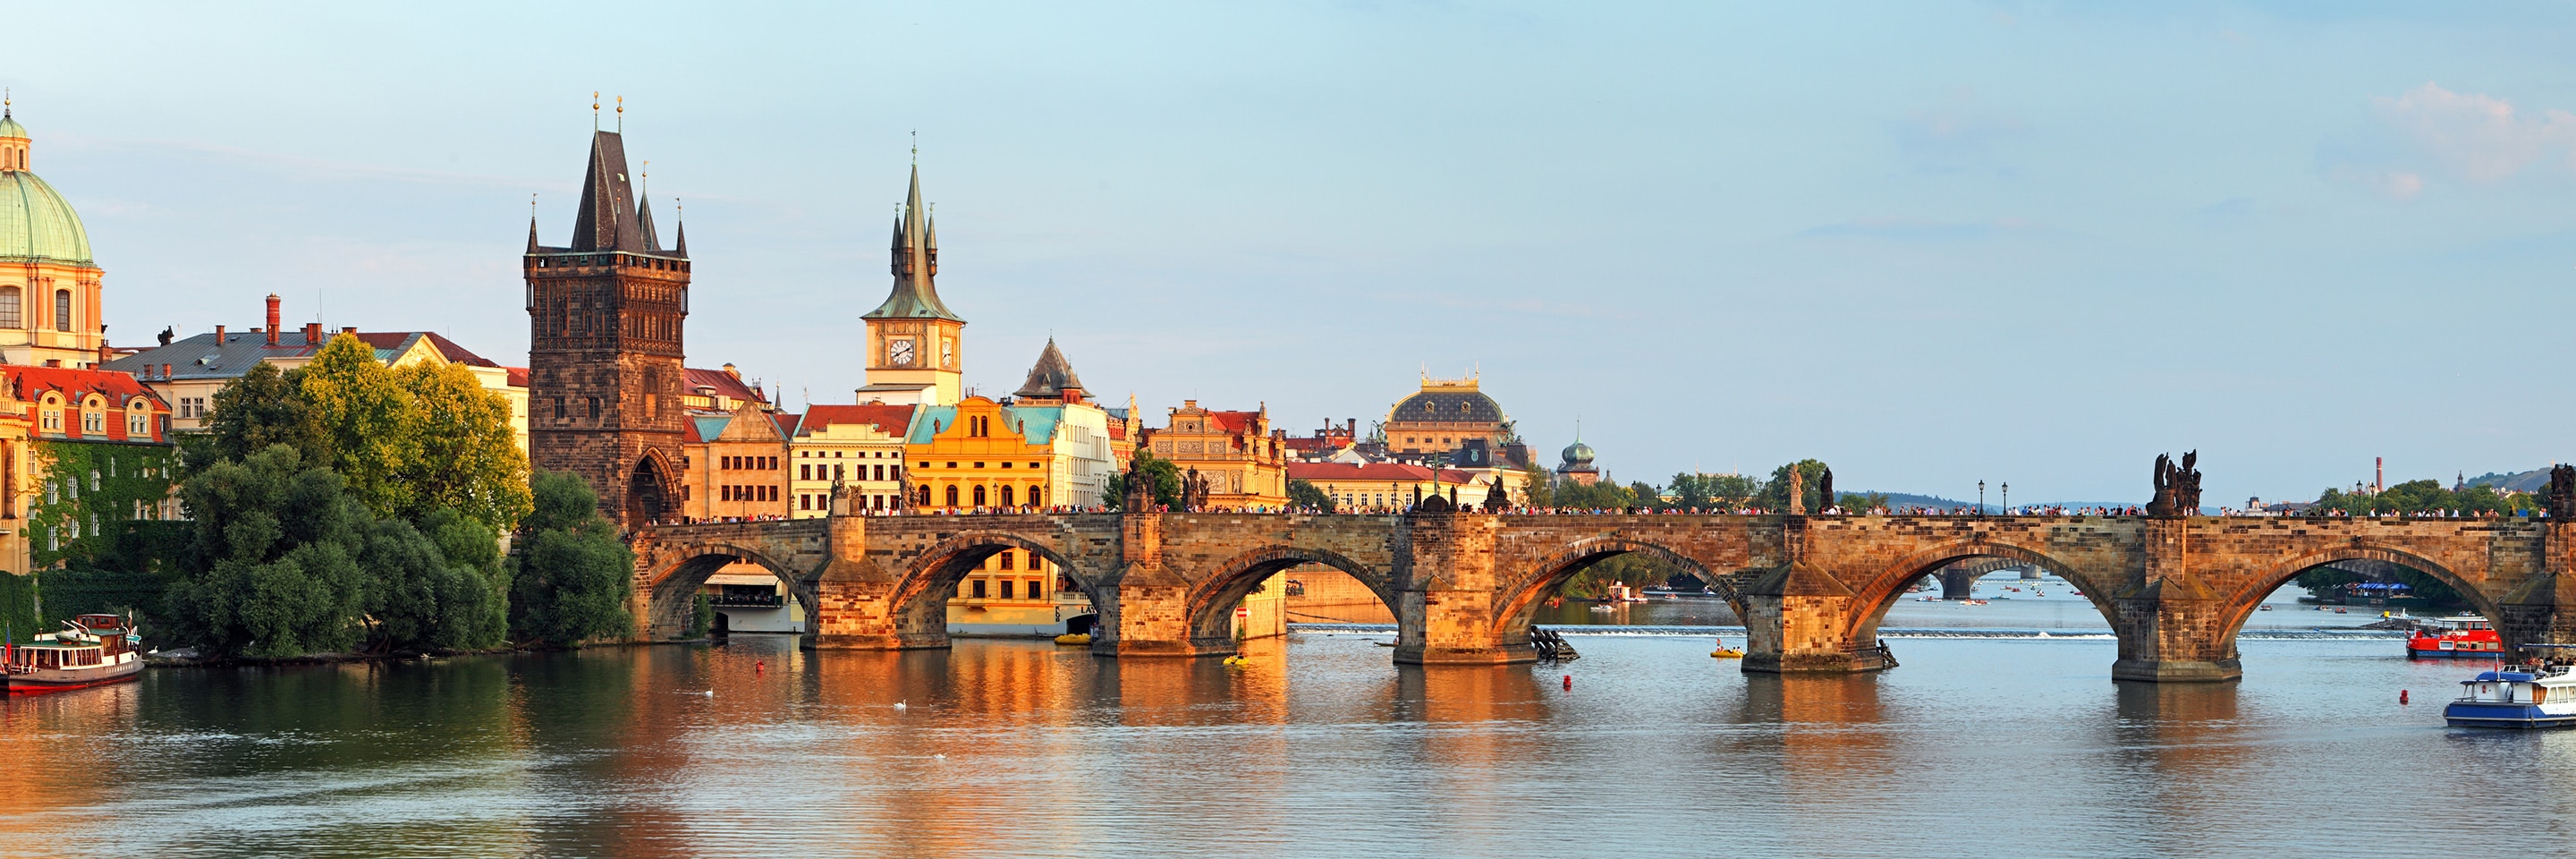 Il Ponte Carlo sul fiume Moldava a Praga. Hotel a Praga - Marriott.